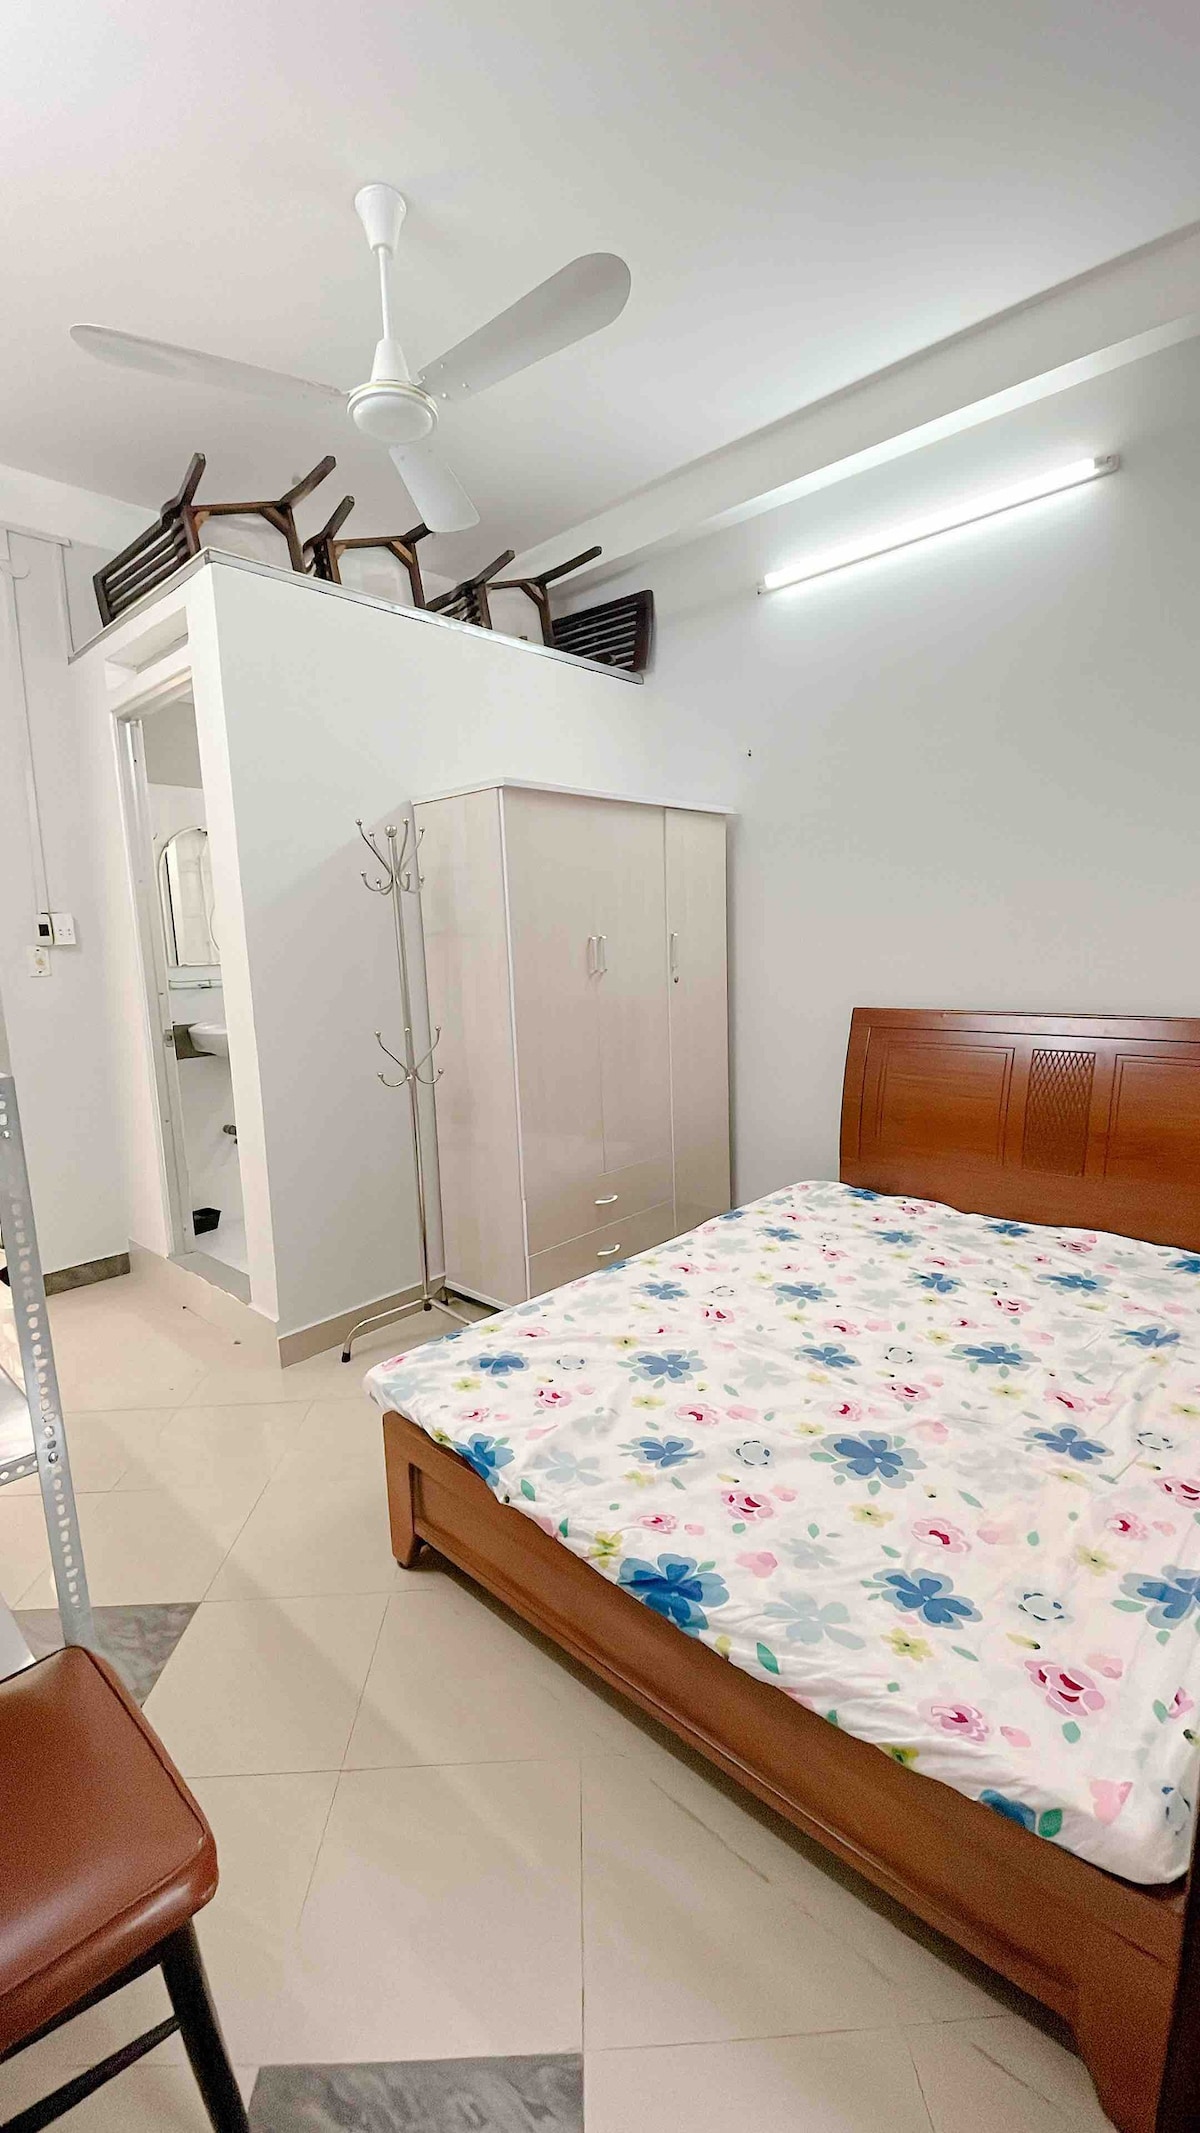 2 Bed + 1 Patio Nguyen Huu Canh, Binh Thanh, HCM